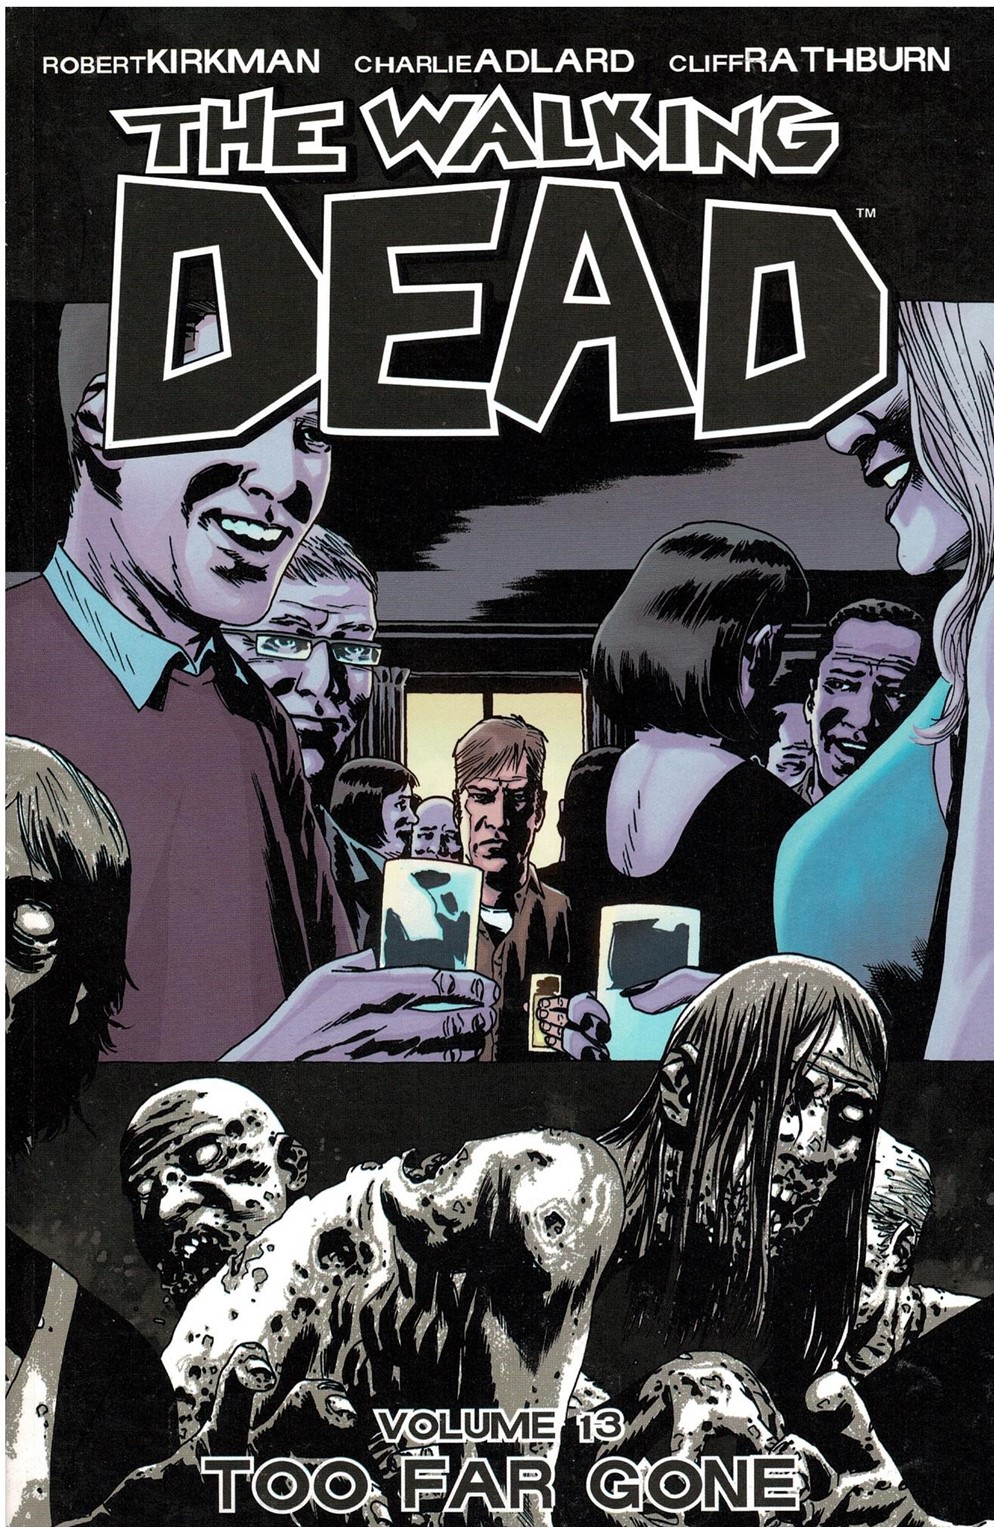 The Walking Dead Trade Paperback Volume 13 Too Far Gone - Half Off!